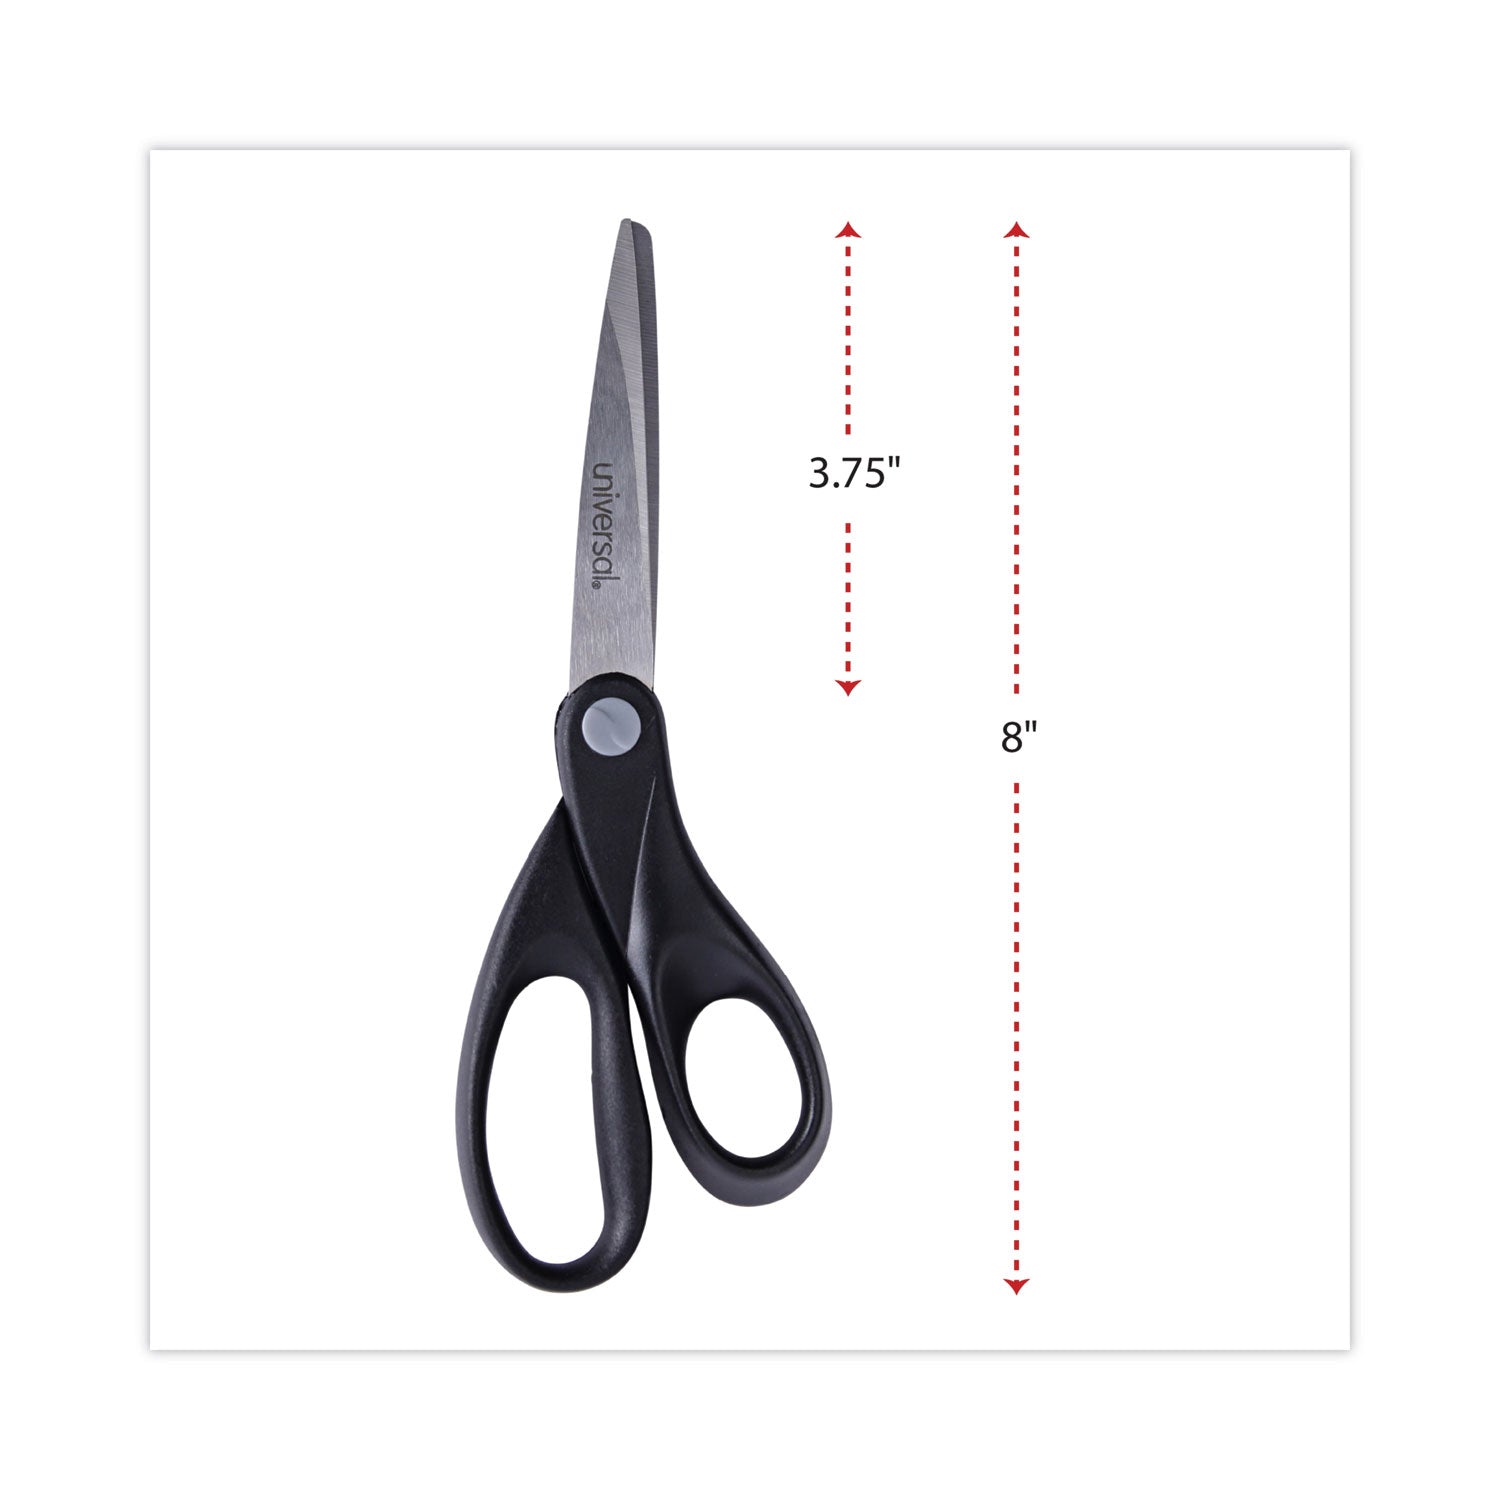 Stainless Steel Office Scissors, 8" Long, 3.75" Cut Length, Black Straight Handle - 